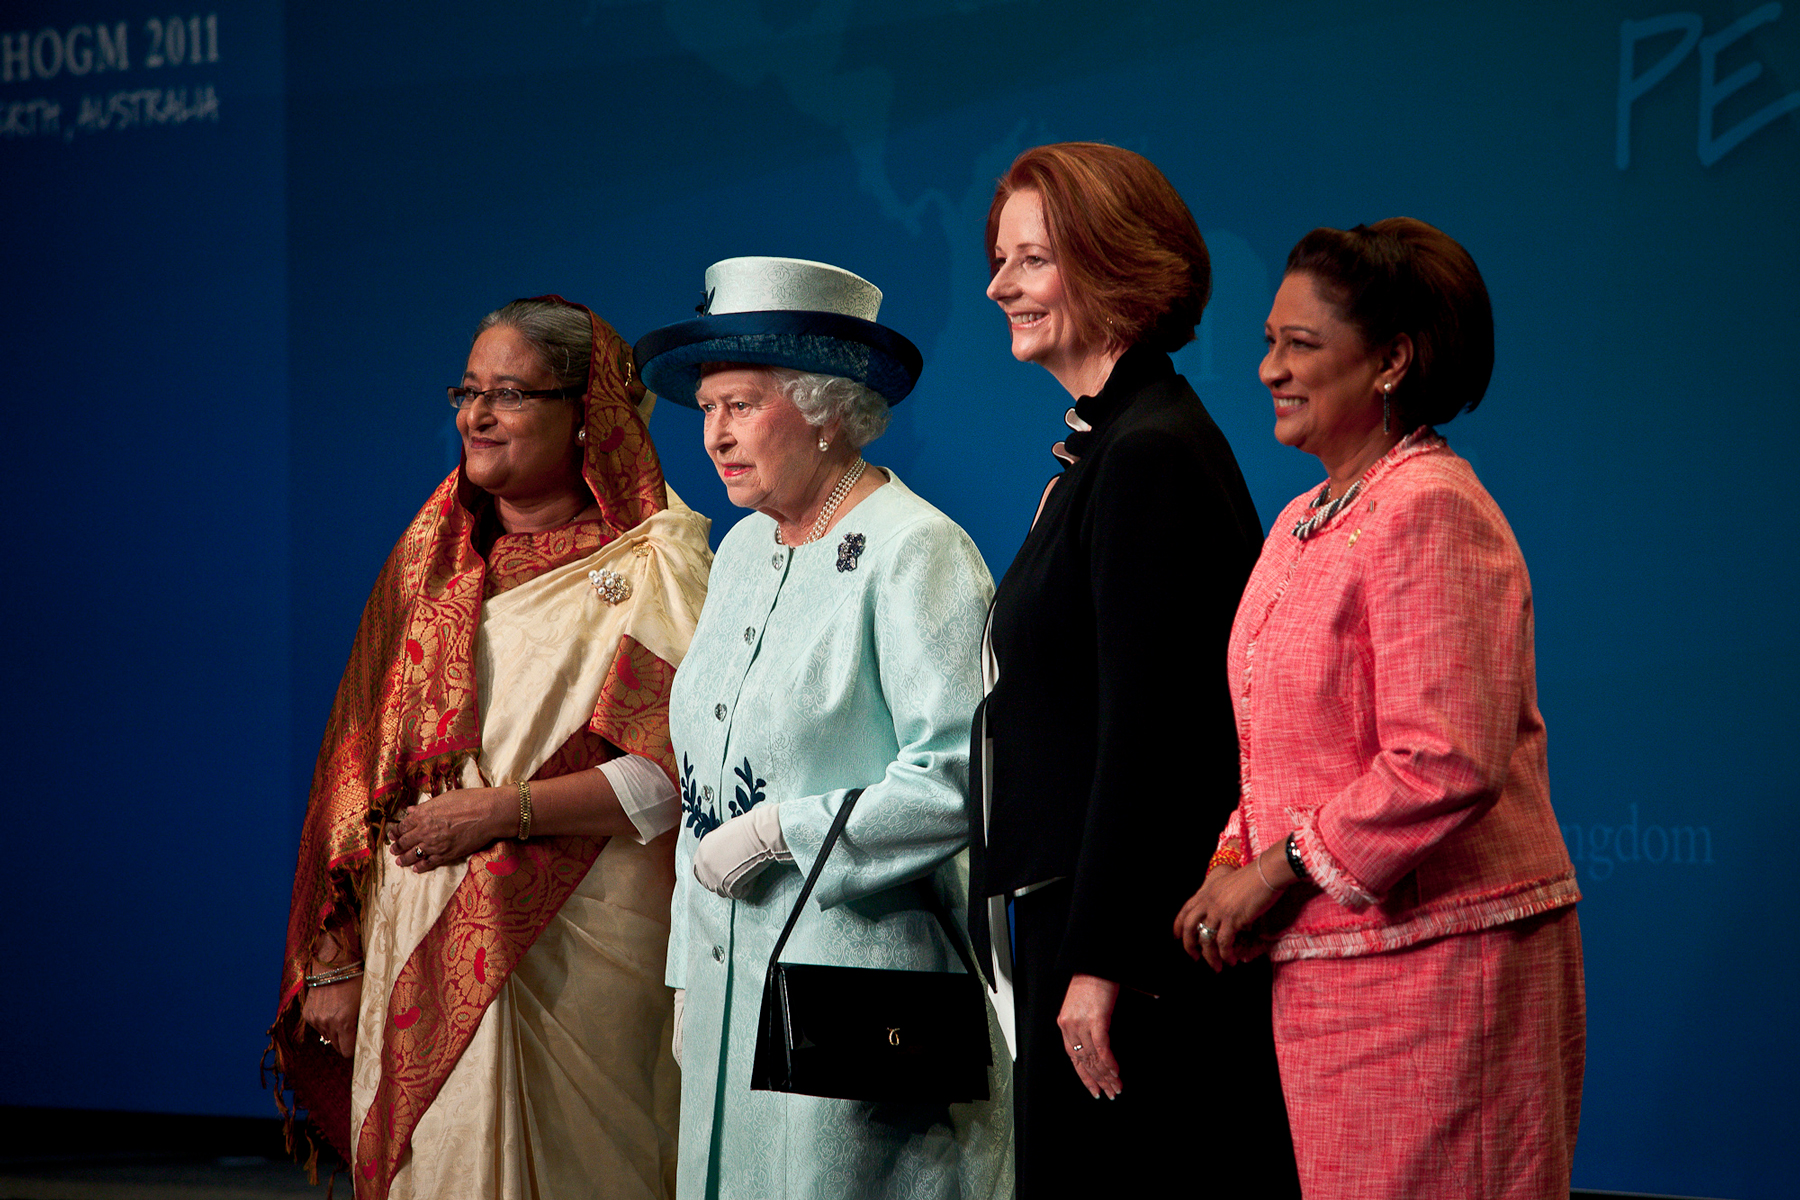 CHOGM Event LED Stage Lighting Design World Leaders Australian Prime Minster Julia Gillard with Queen Elizabeth